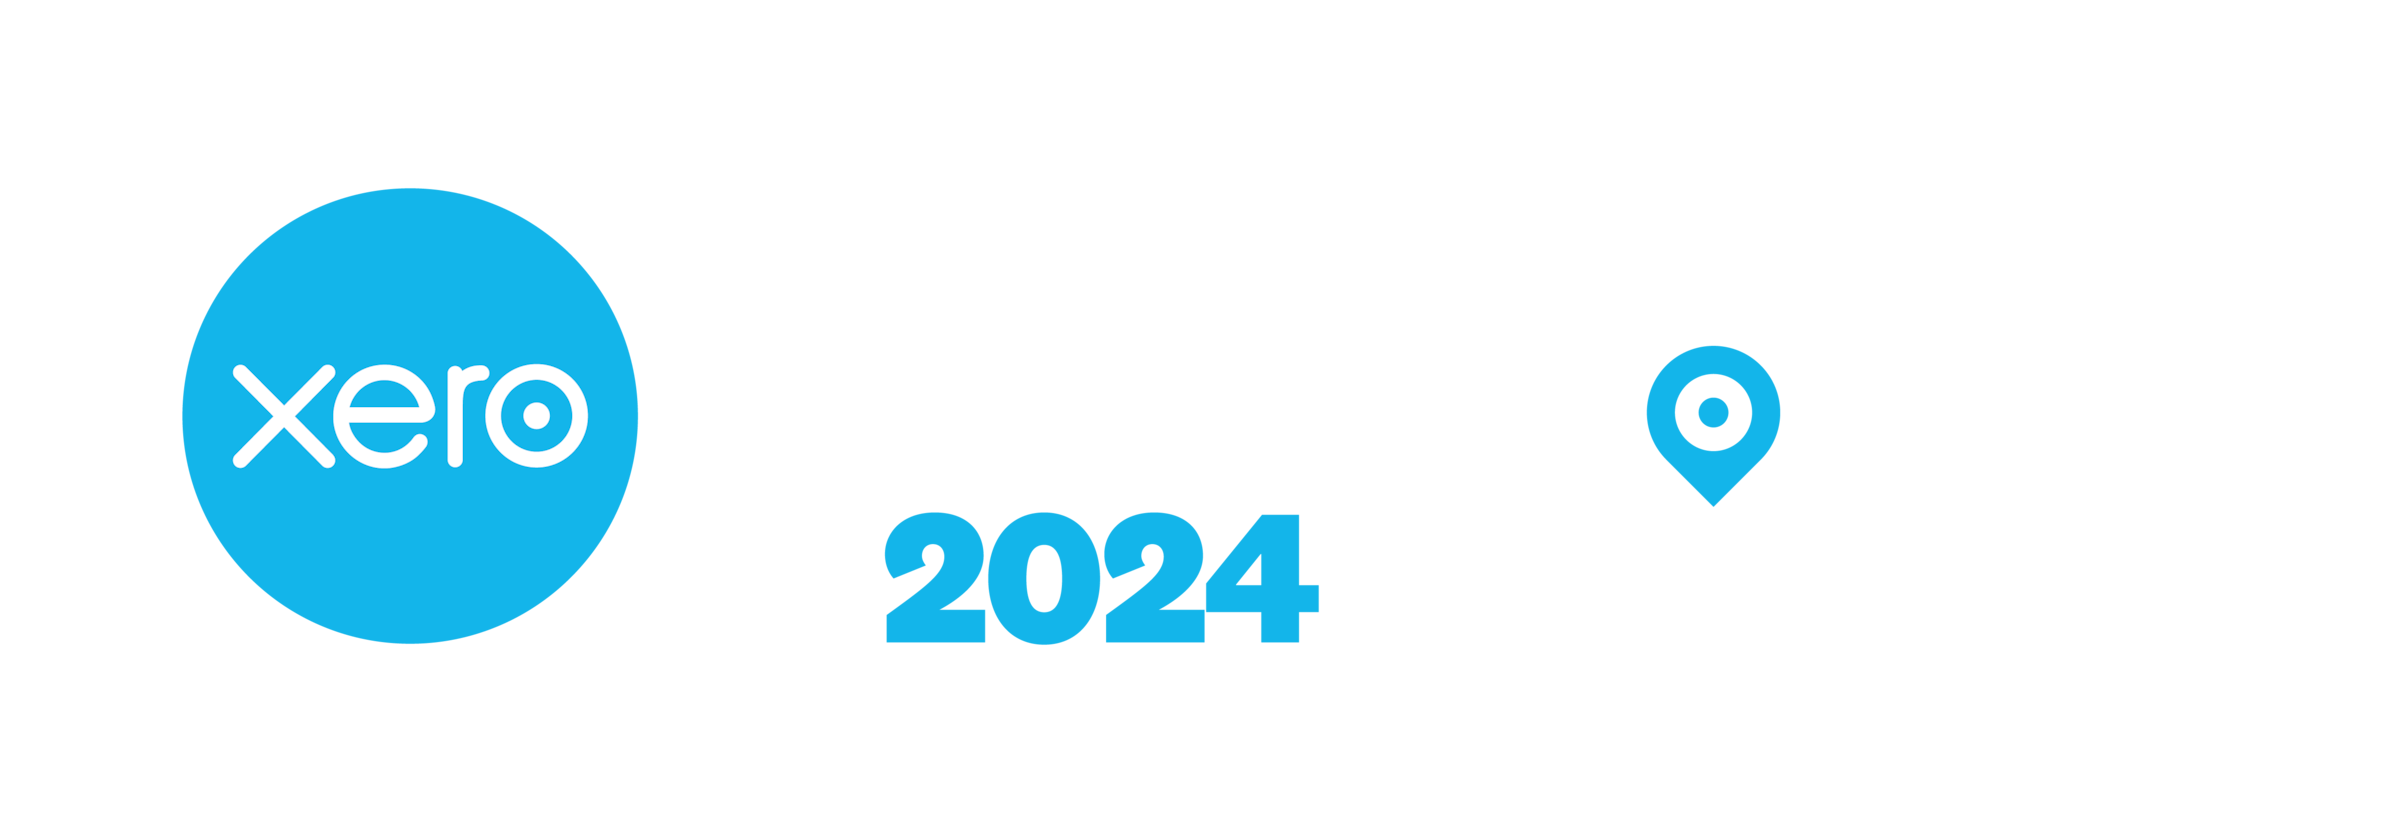 Xero South Africa Roadshow 2024